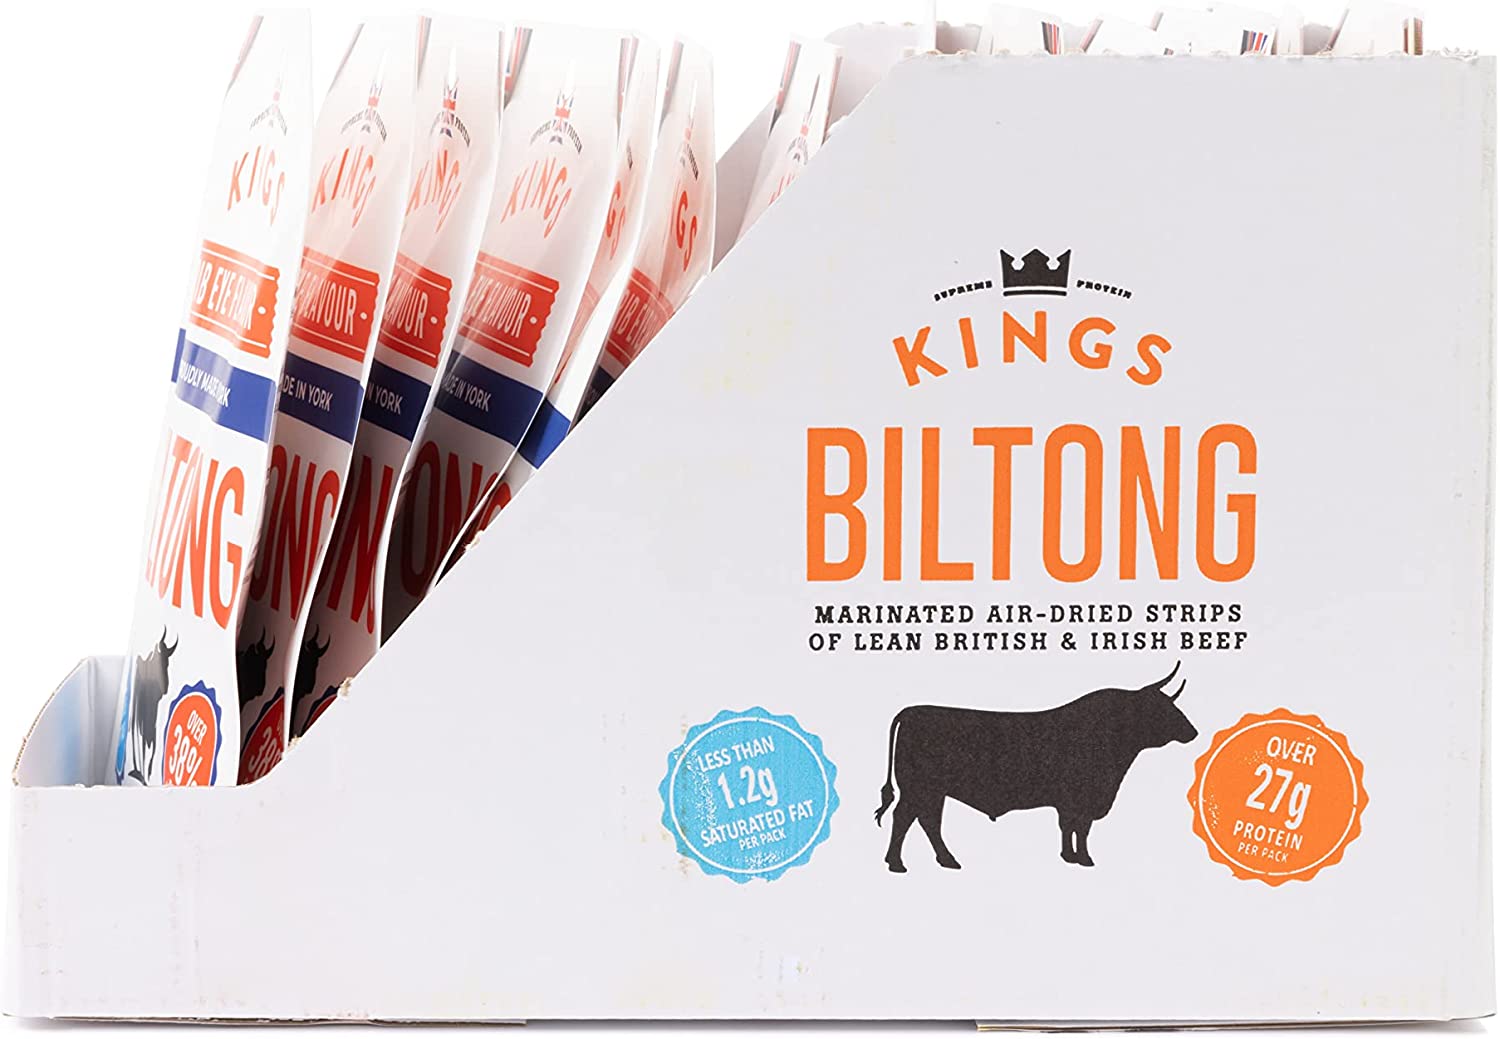 Kings Ribeye Biltong Box 16 x 35g Review - UK